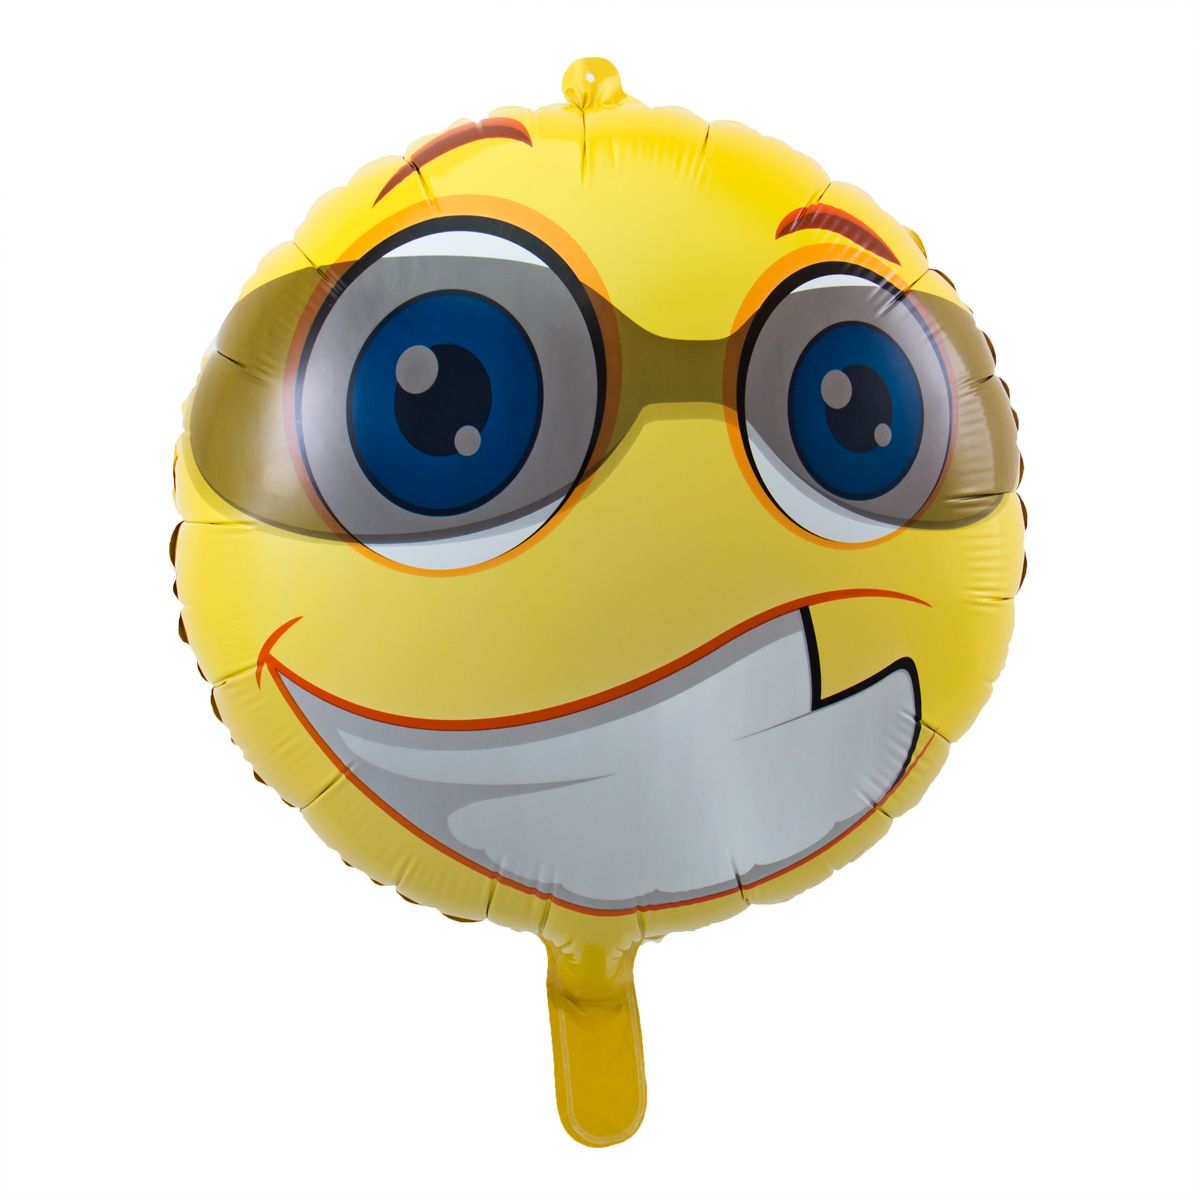 Zonnebril emoticon geel folieballon